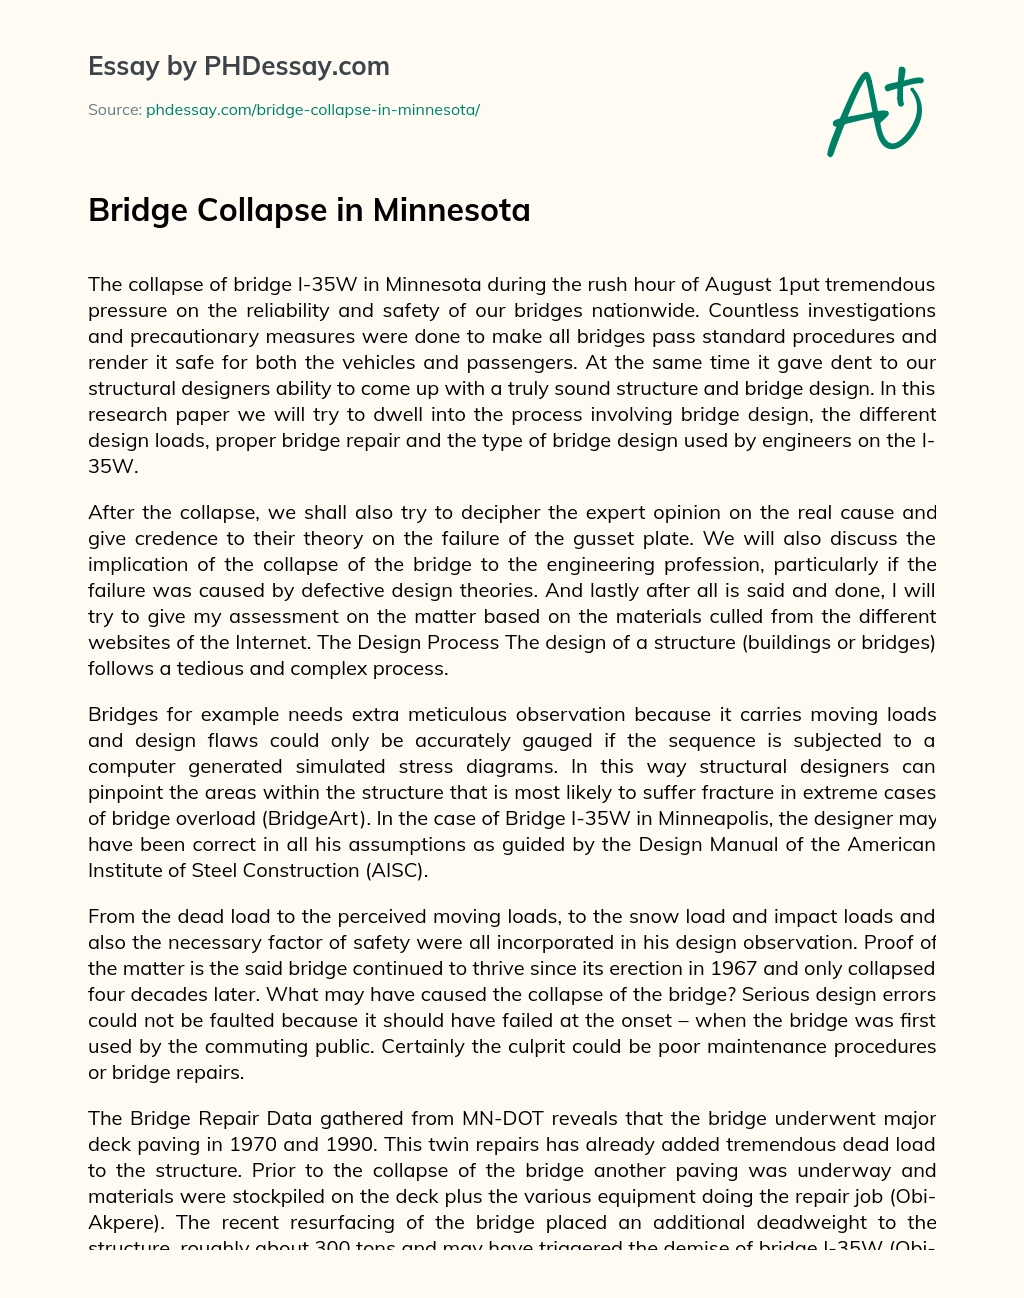 Bridge Collapse in Minnesota essay